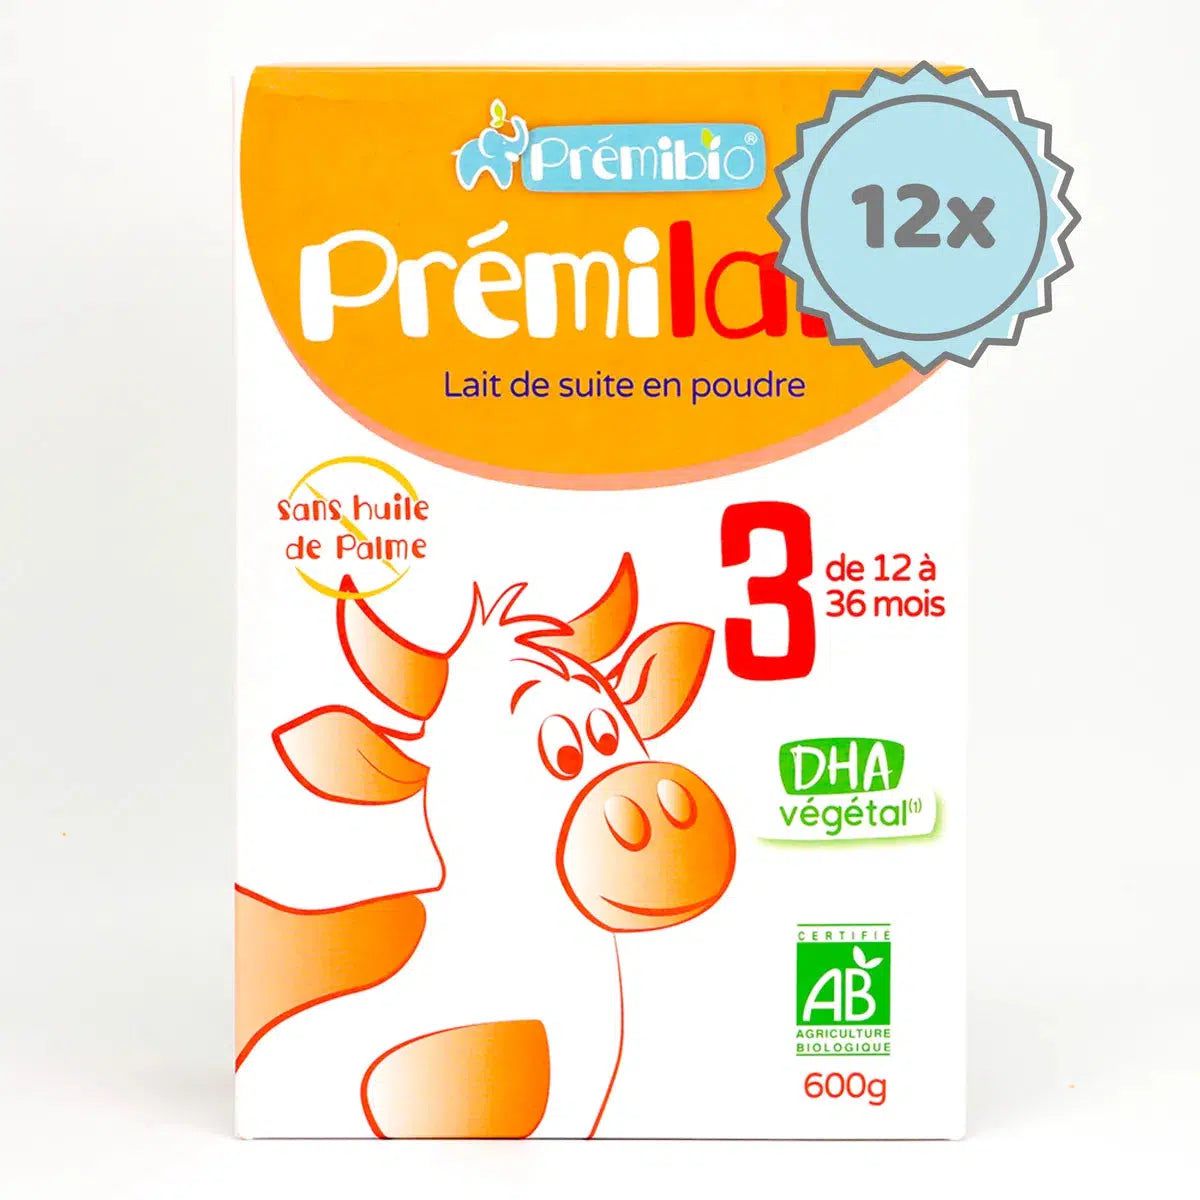 Premibio Organic Premilait Toddler Cow Formula- Stage 3 (12 to 36 months) - (600g) - 12 Boxes